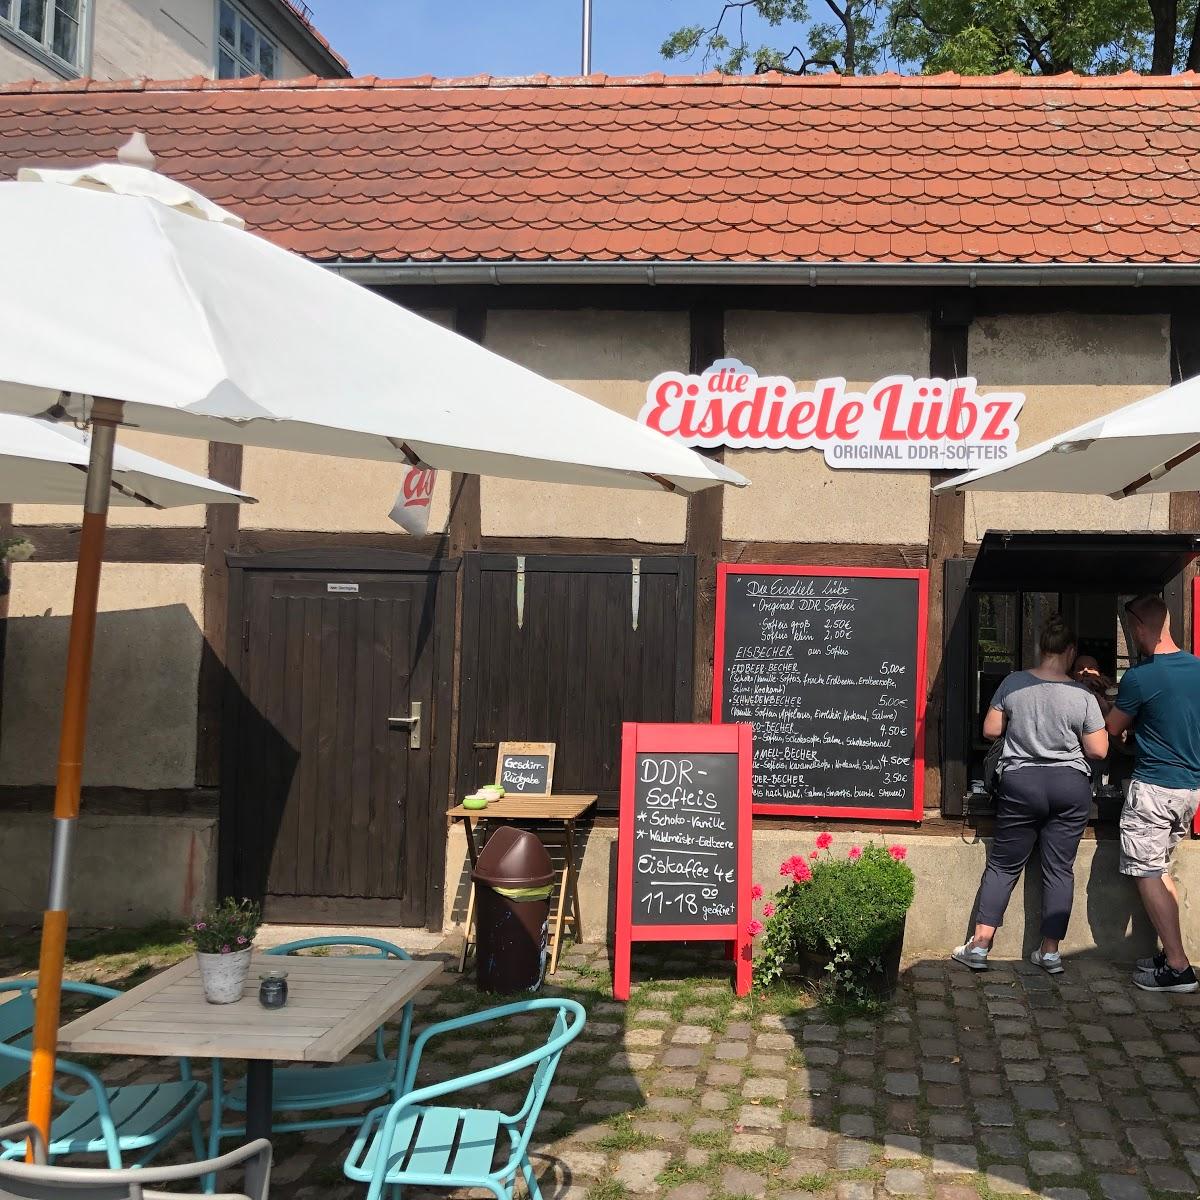 Restaurant "Die Eisdiele" in Lübz